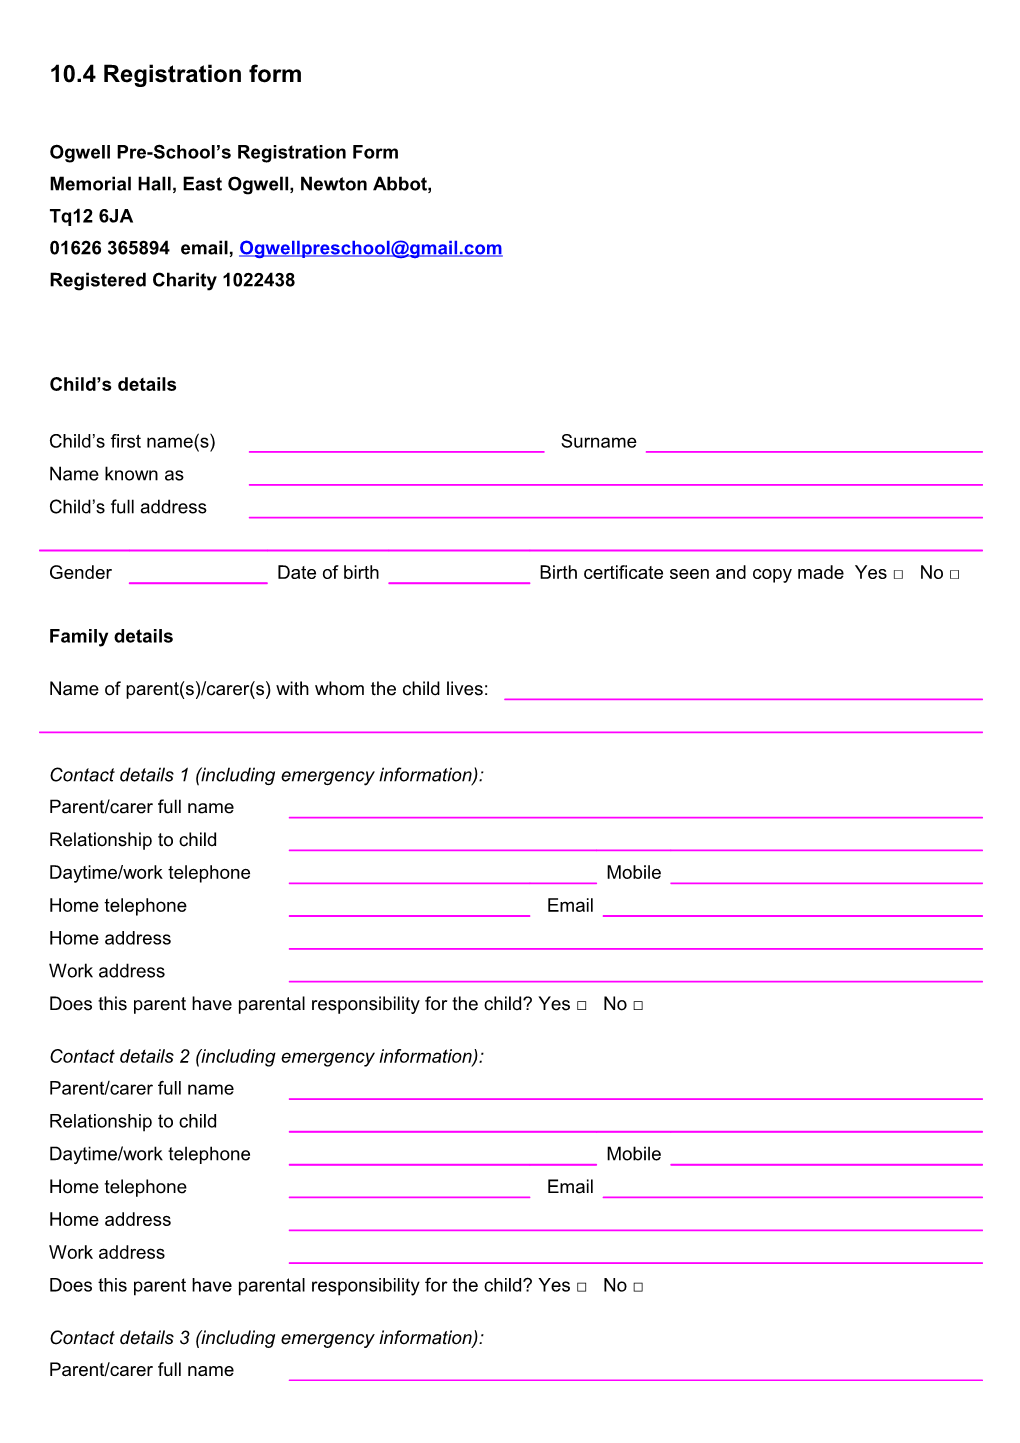 Ogwell Pre-School S Registration Form